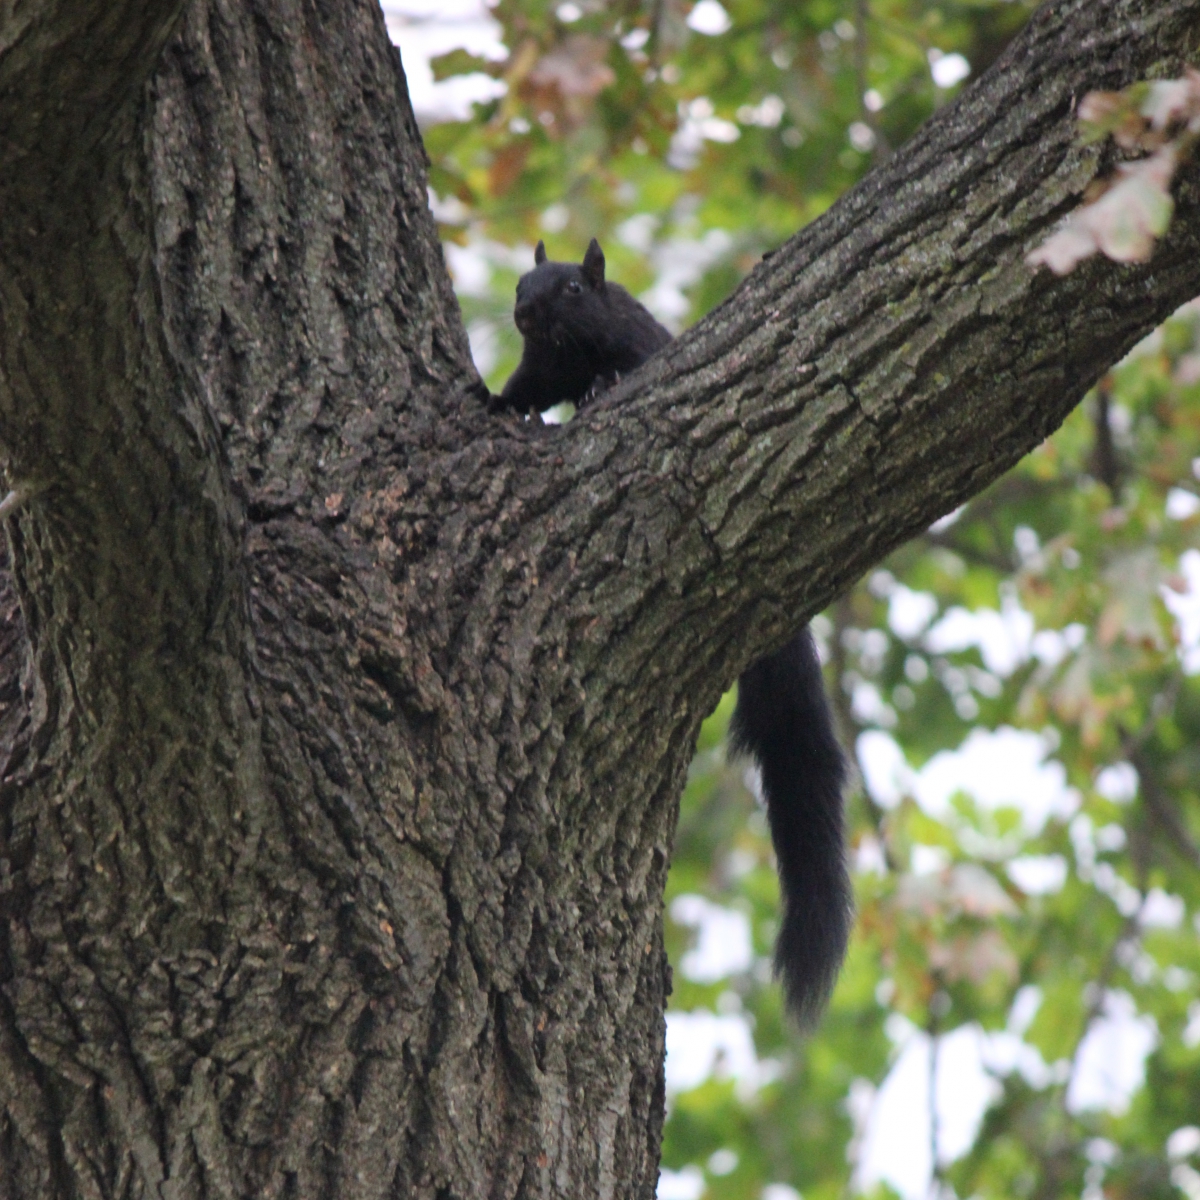 Black squirrel climbing a tree